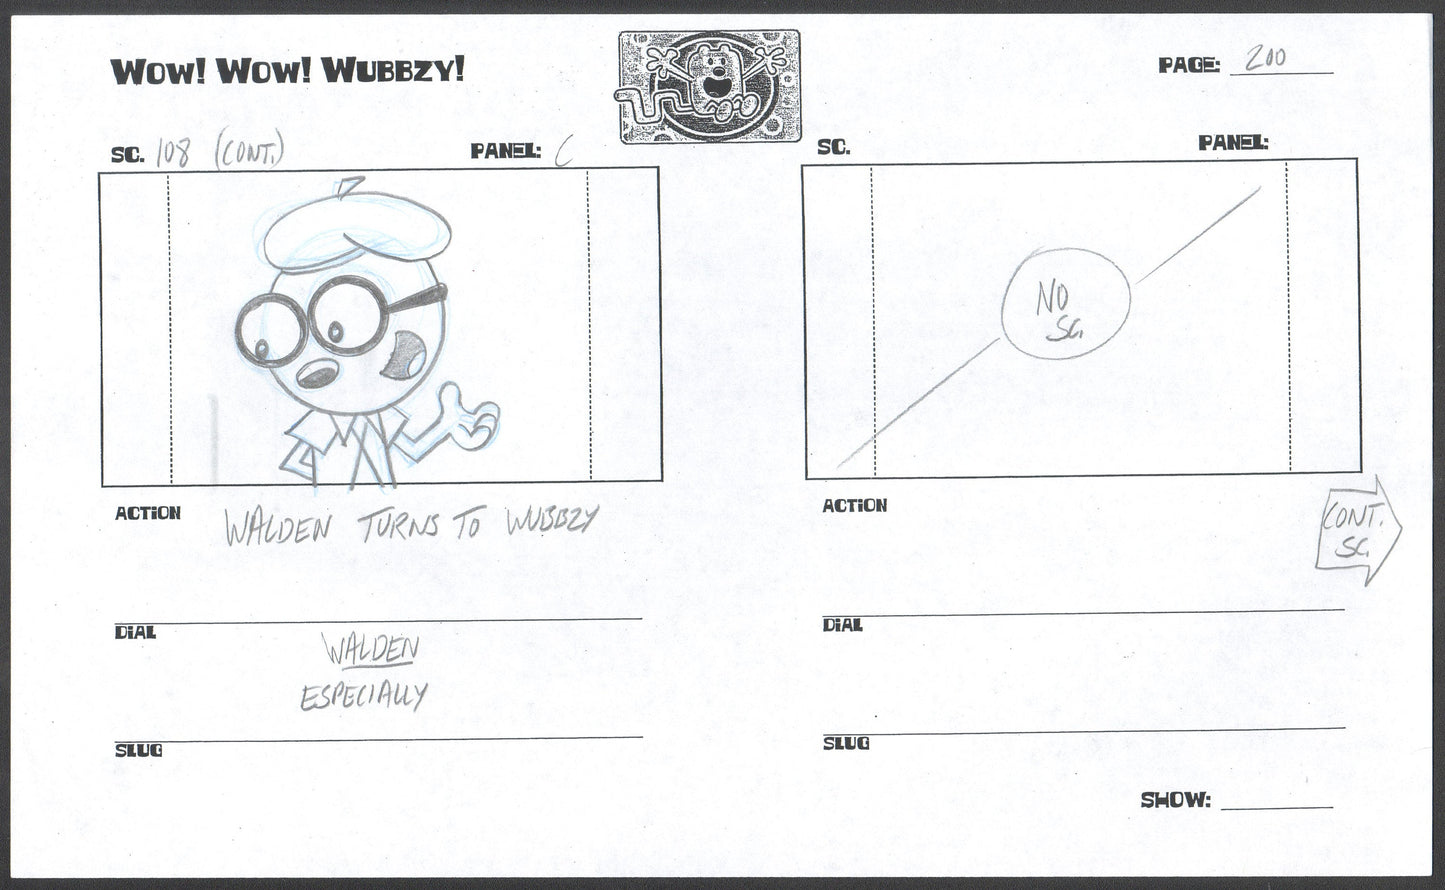 Wow! Wow! Wubbzy! Walden Original Production storyboard NICKELODEON p200